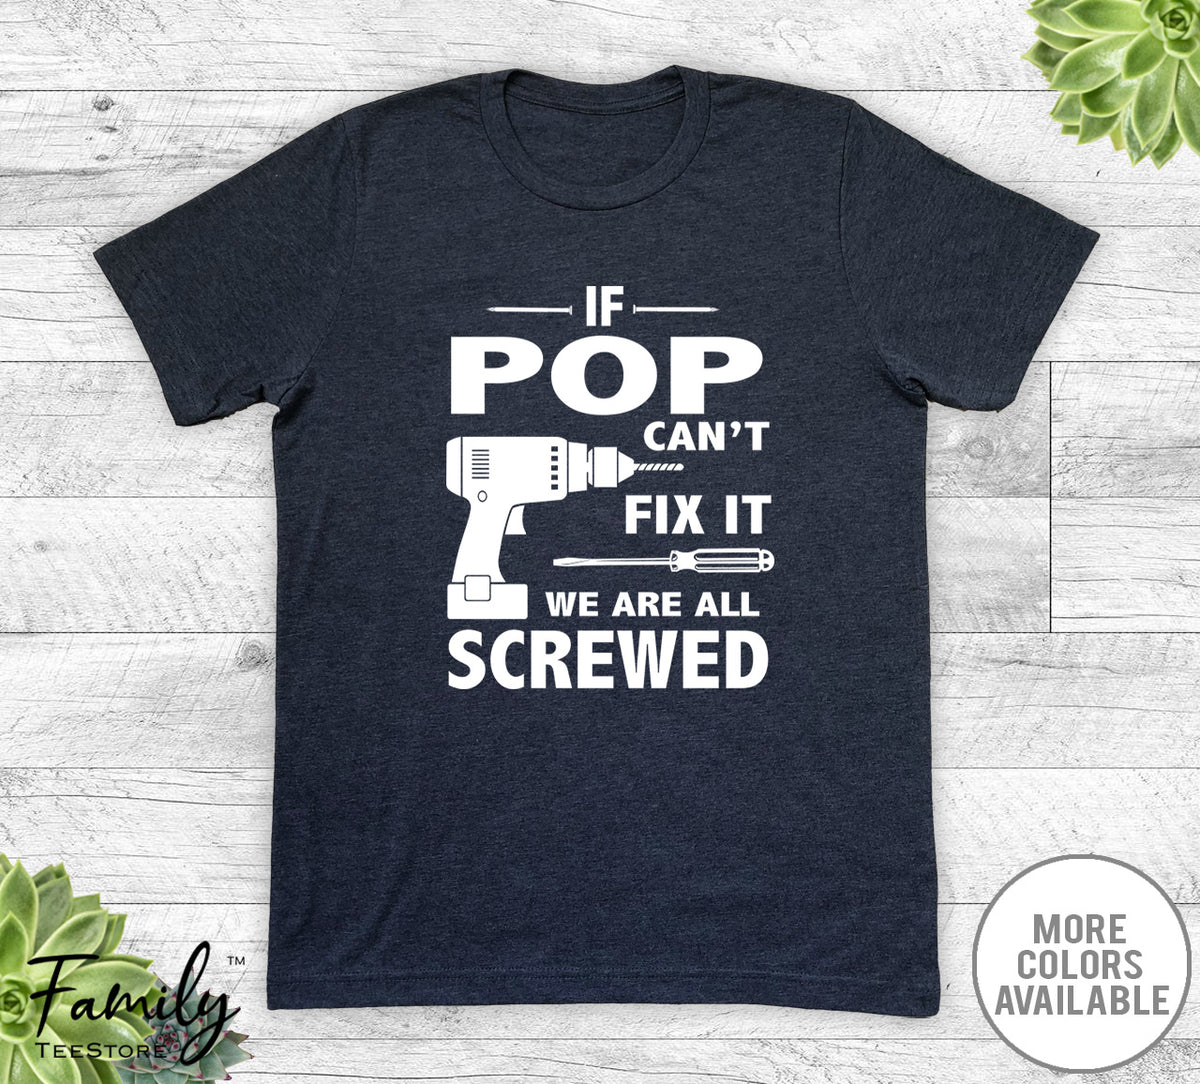 If Pop Can't Fix It We Are All Screwed - Unisex T-shirt - Pop Shirt - Pop Gift - familyteeprints